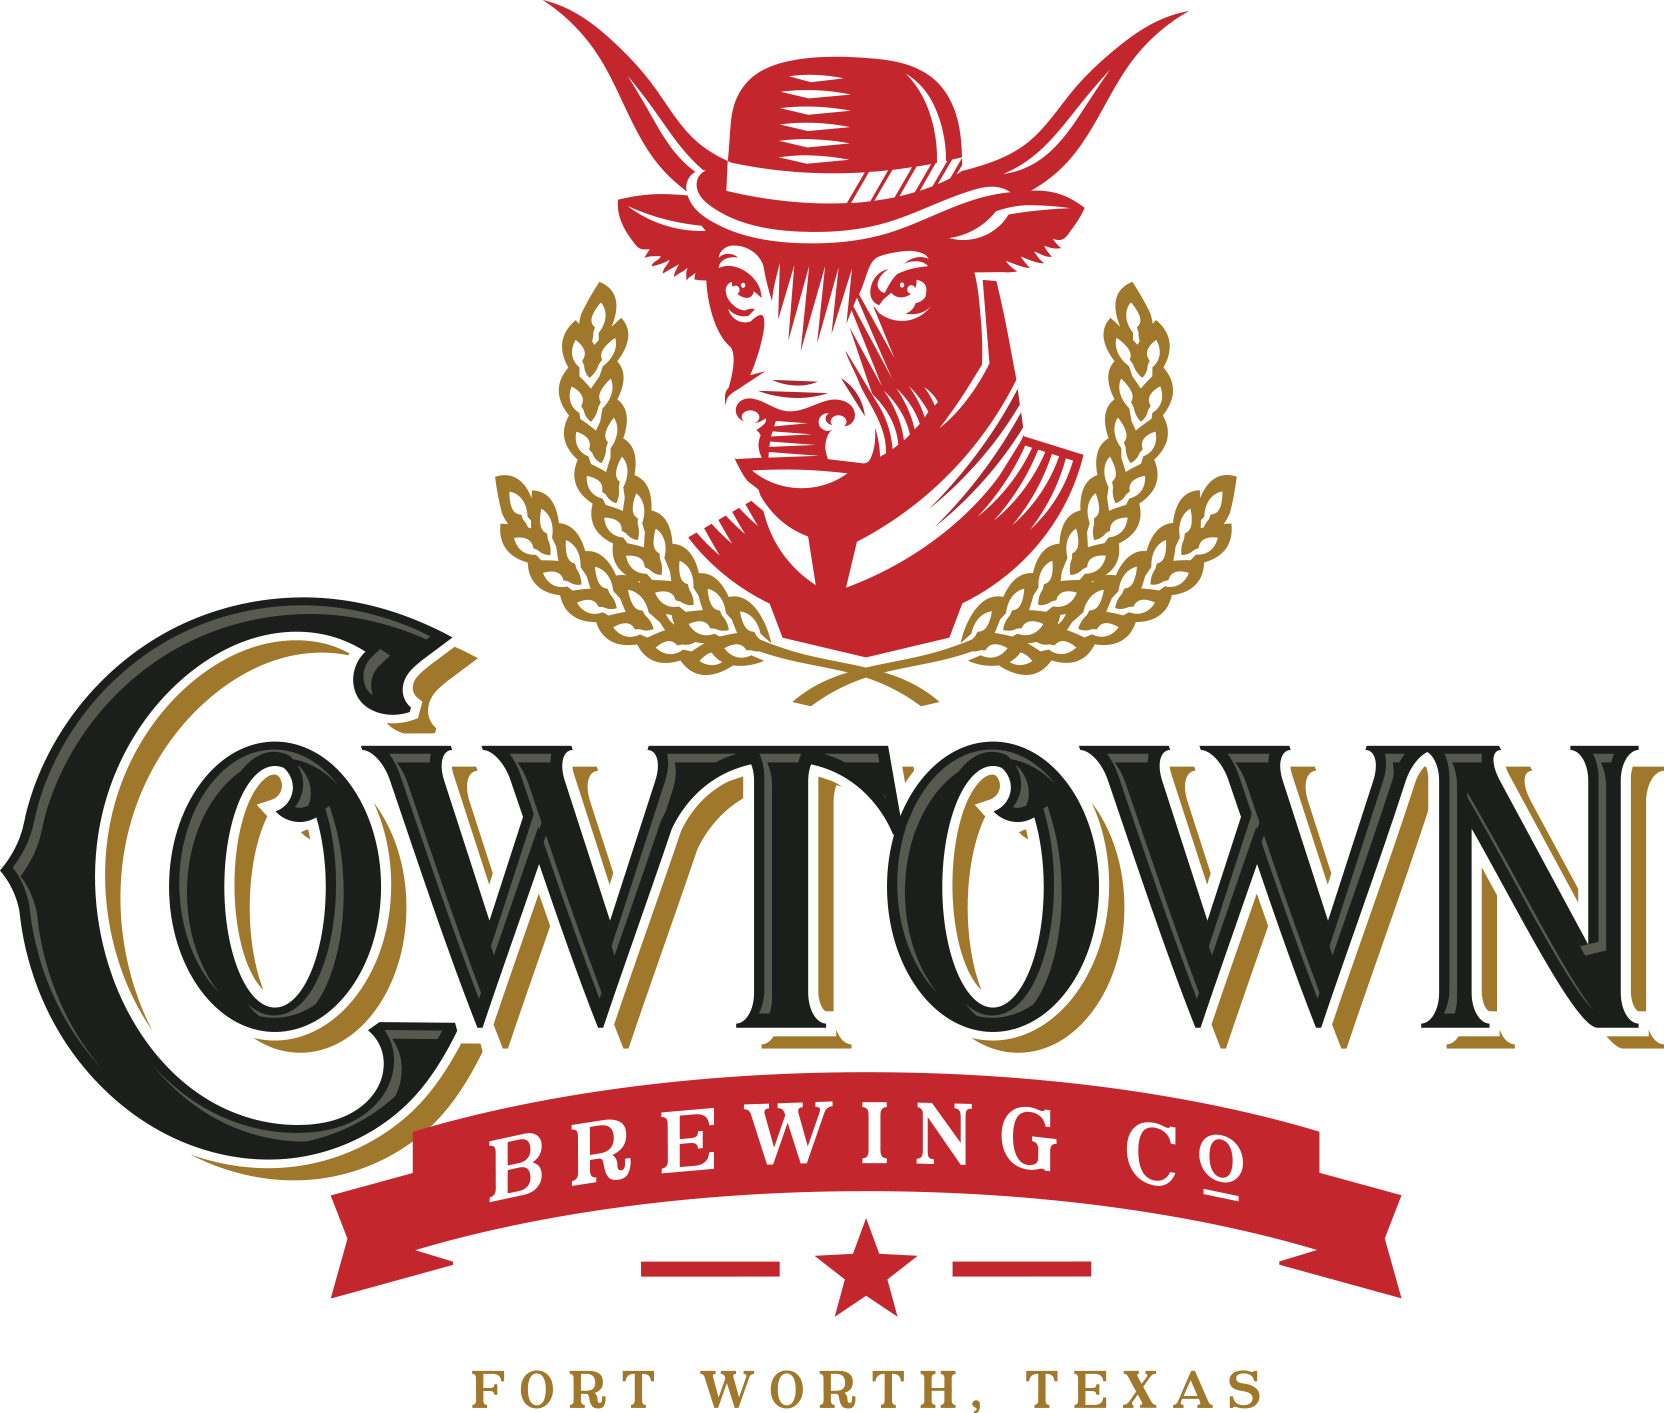 Cowtown Logo